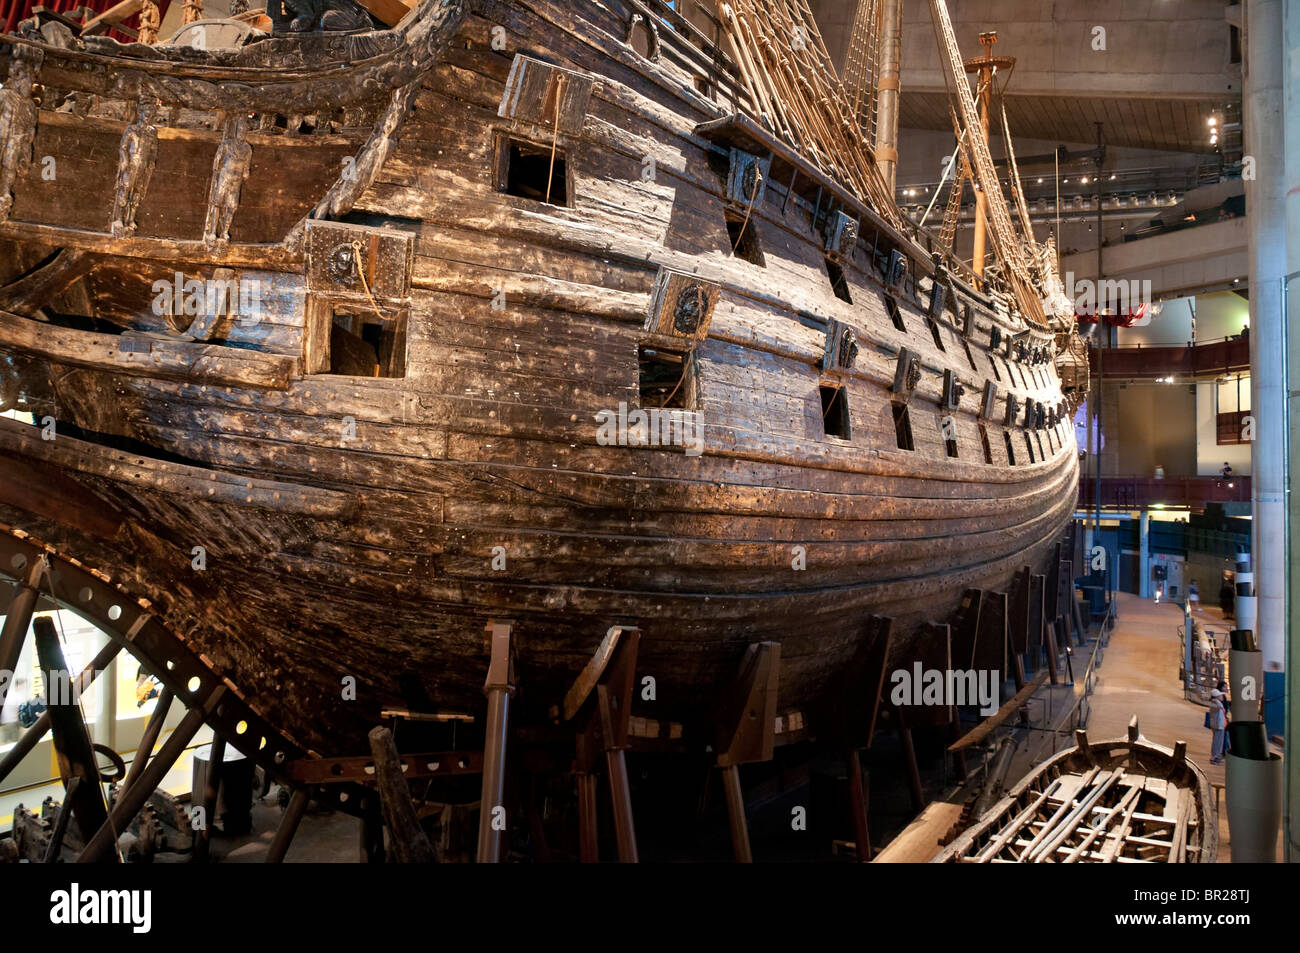 The Vasa Swedish Warship in the Vasamuseet (Vasa Museum) in Stockholm, Sweden. Stock Photo